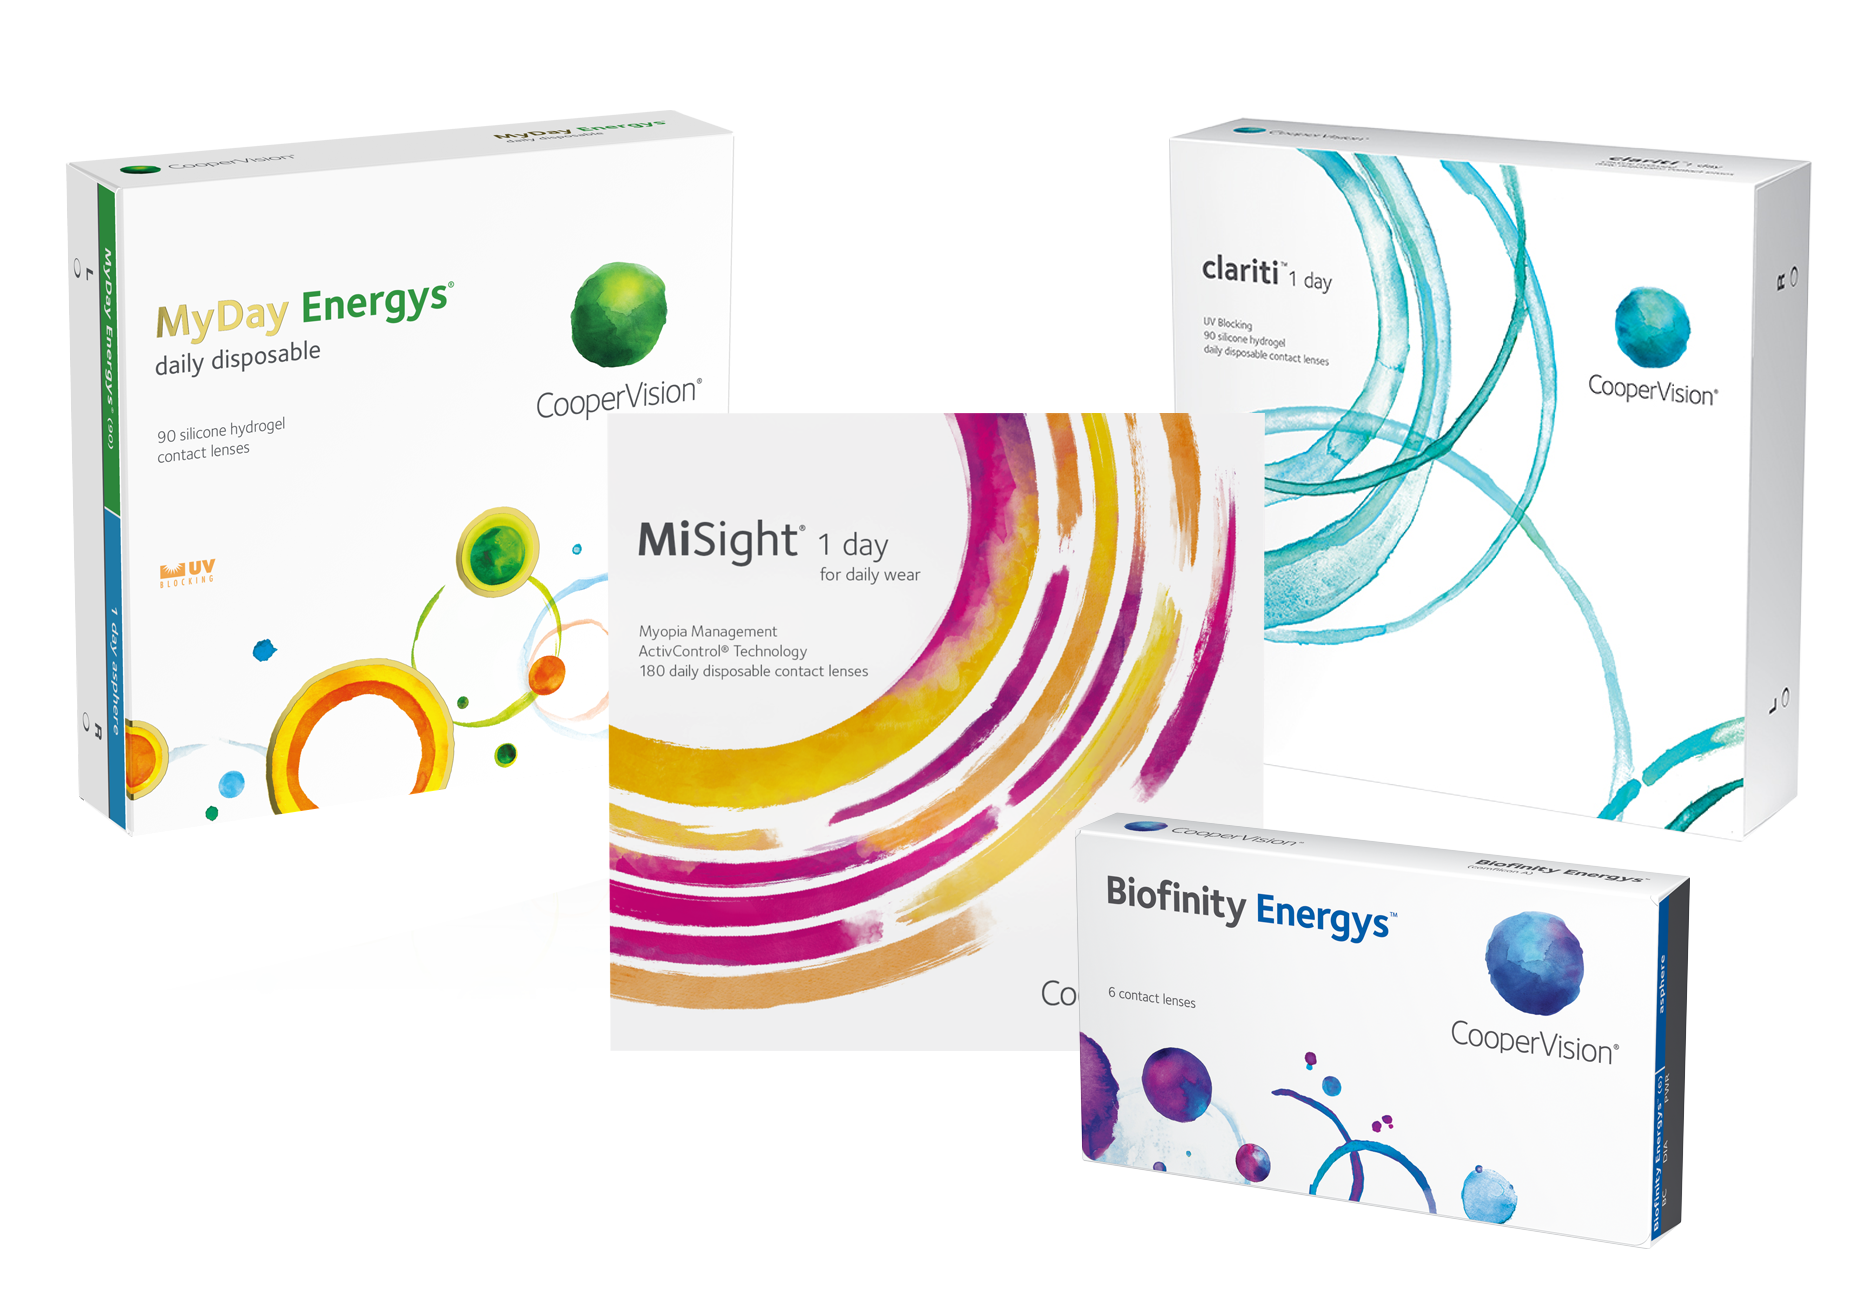 MyDay Energys, MiSight 1 day, clariti 1 day, and Biofinity Energys product shots.